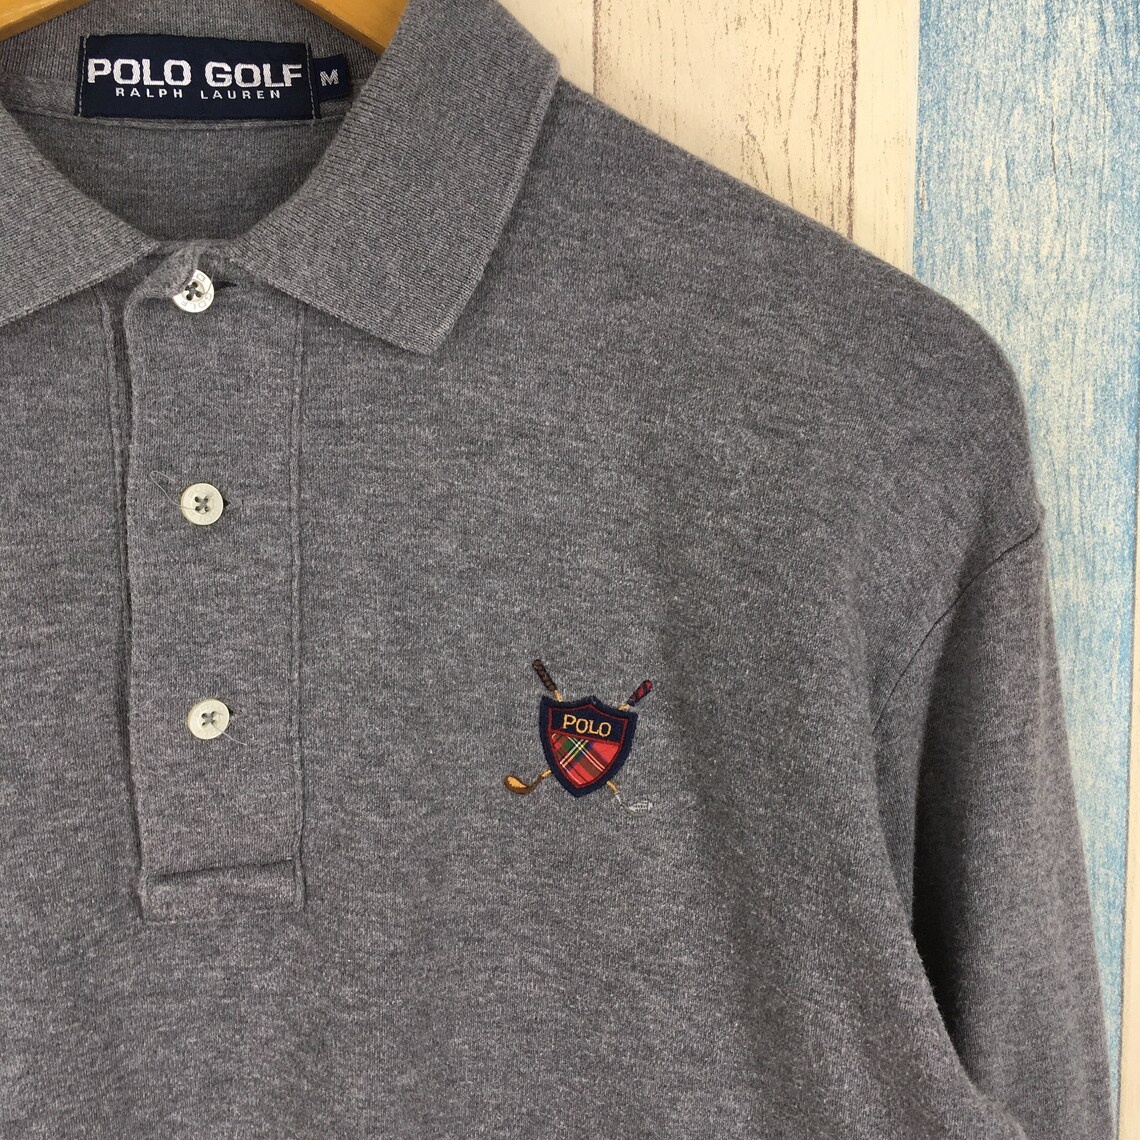 Polo Golf Shirt Medium Vintage 1990's Polo Ralph Lauren | Etsy